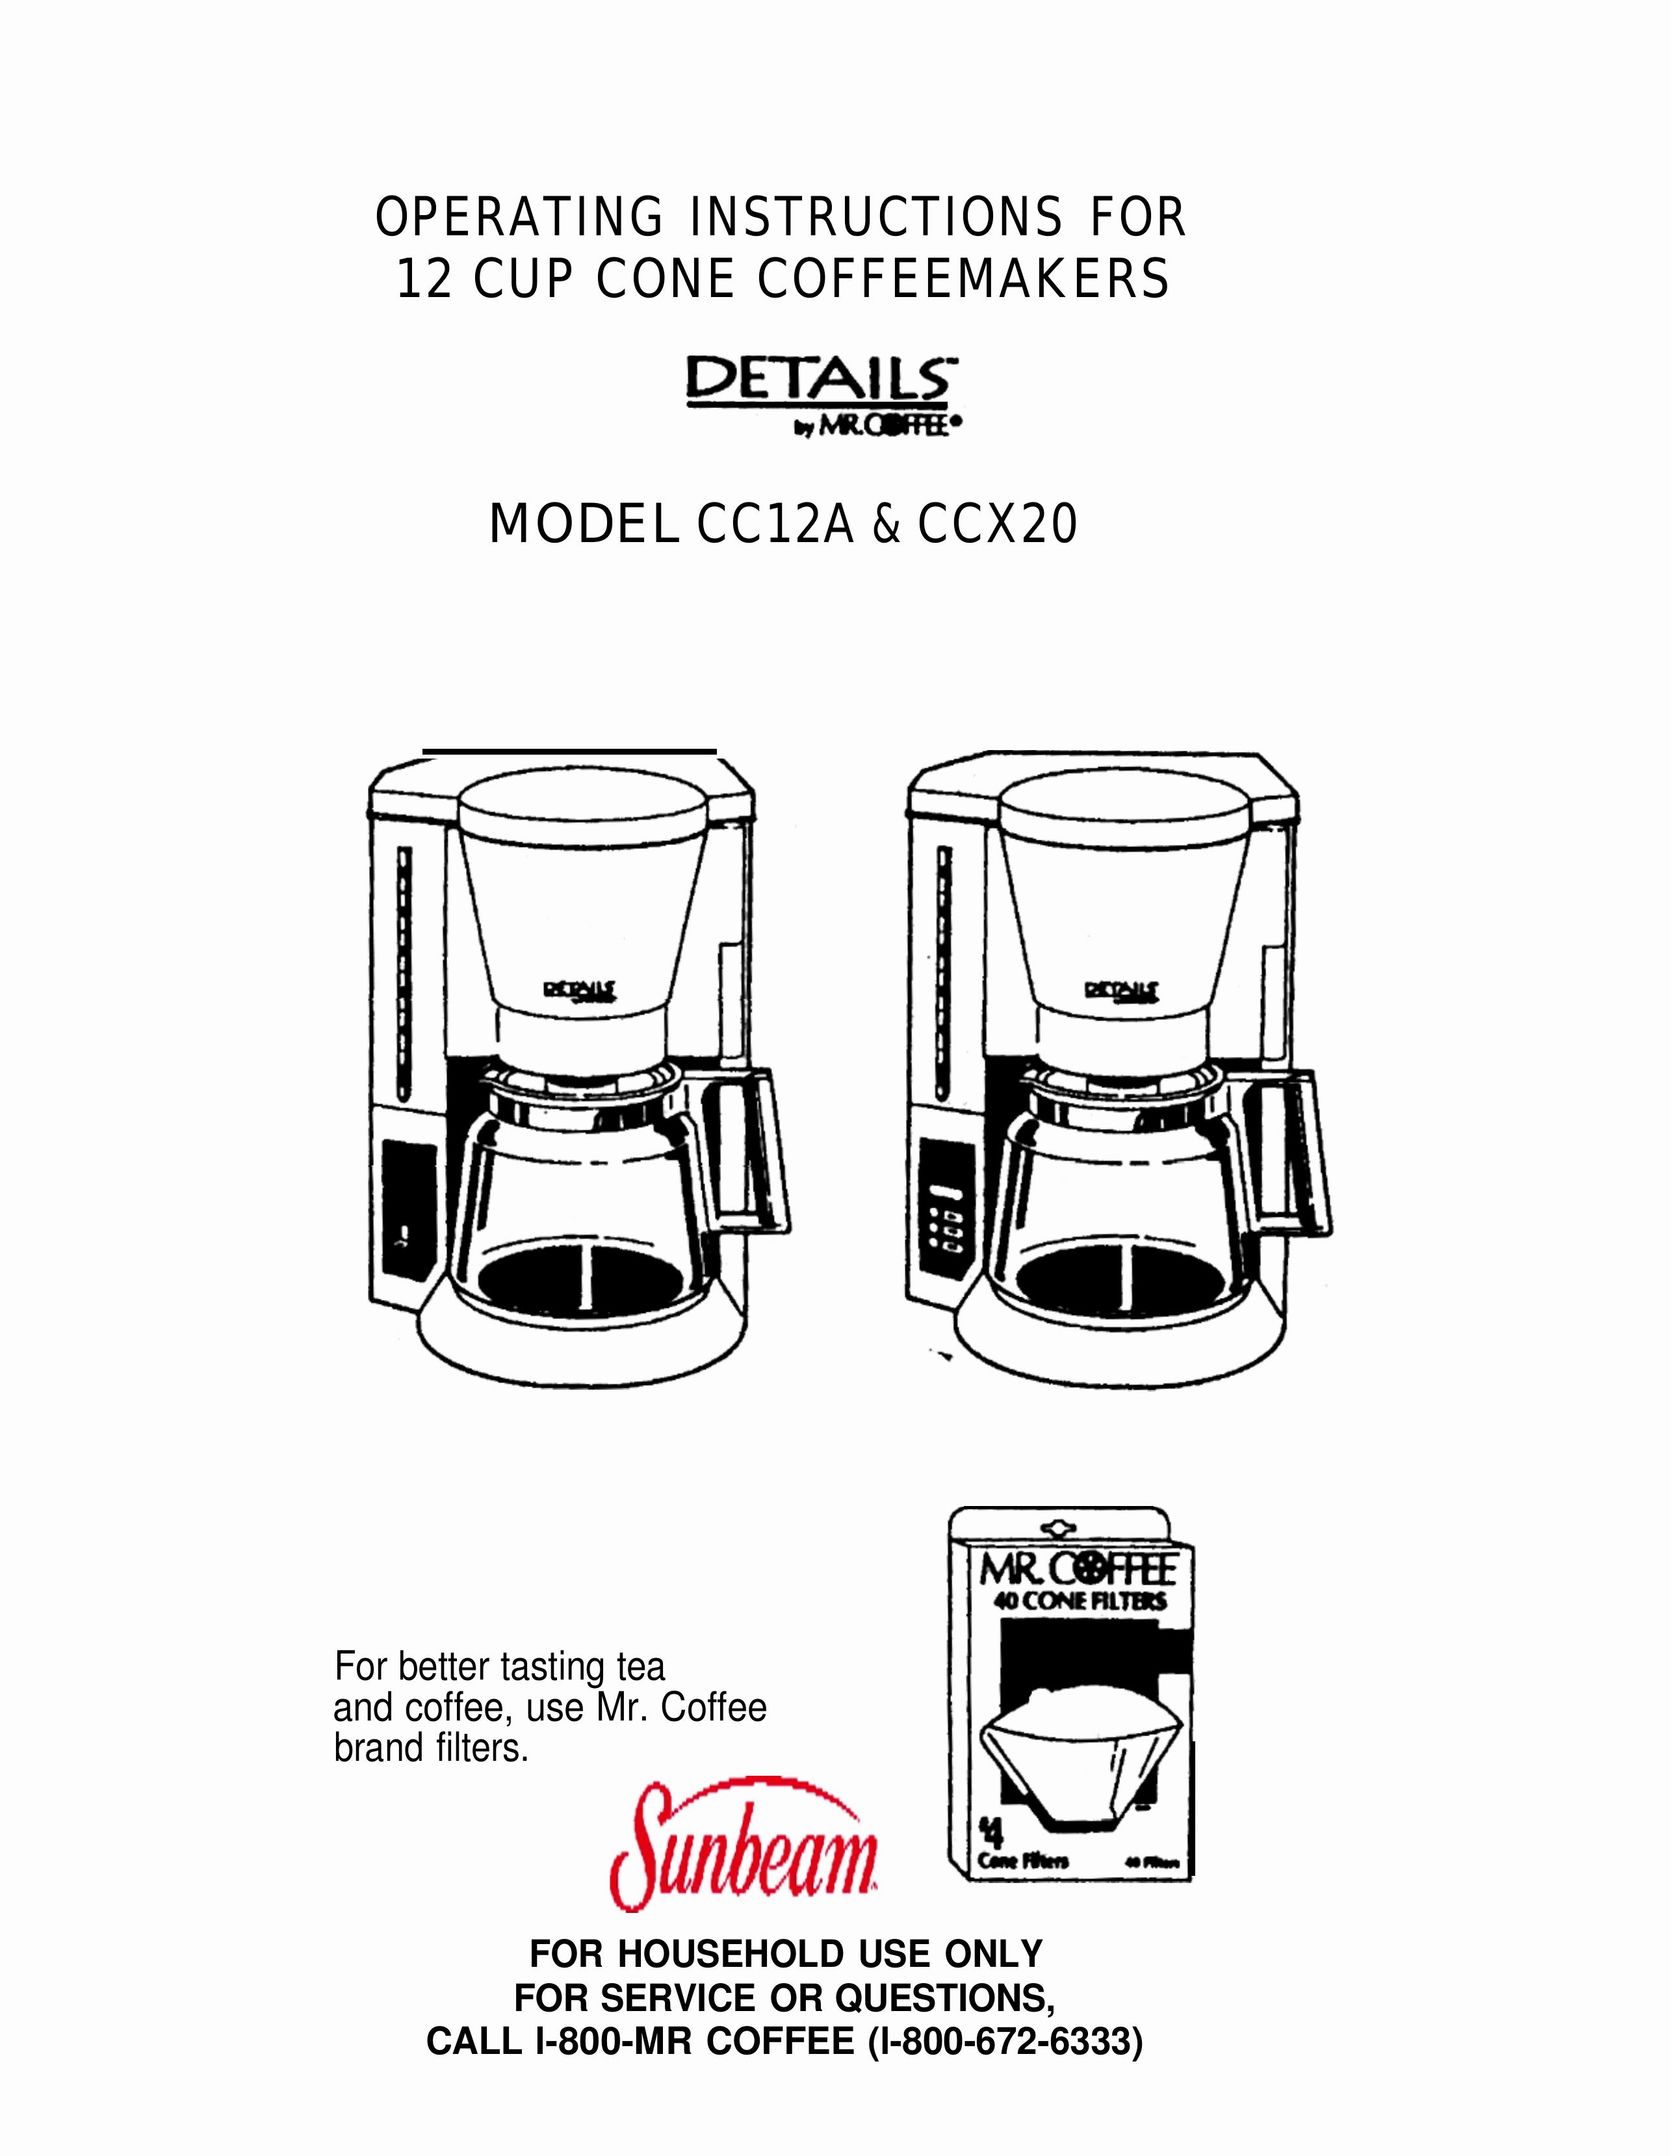 Mr. Coffee CCX20 Coffeemaker User Manual